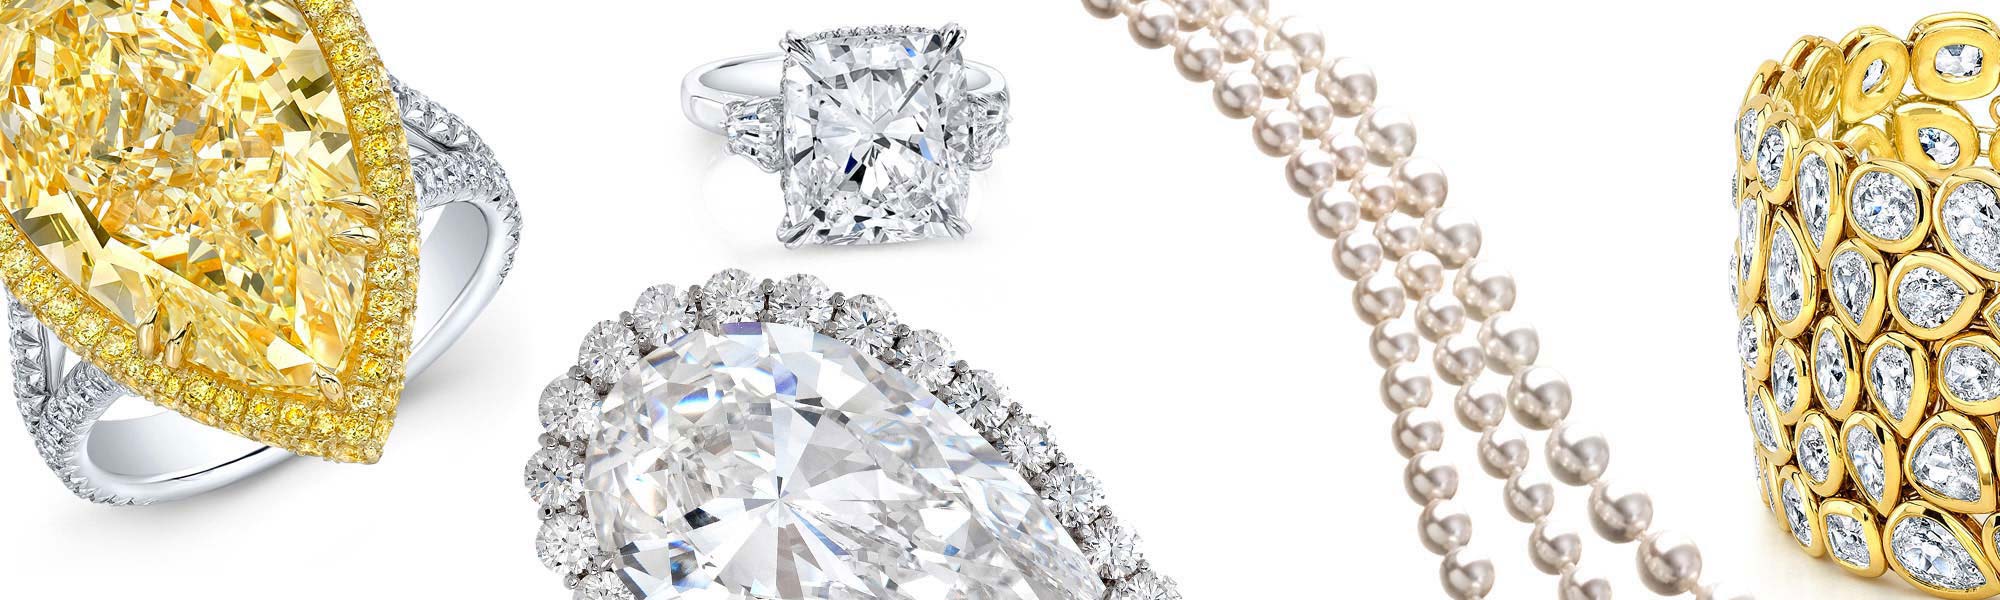 jewelry, diamonds, gemstones and pearls